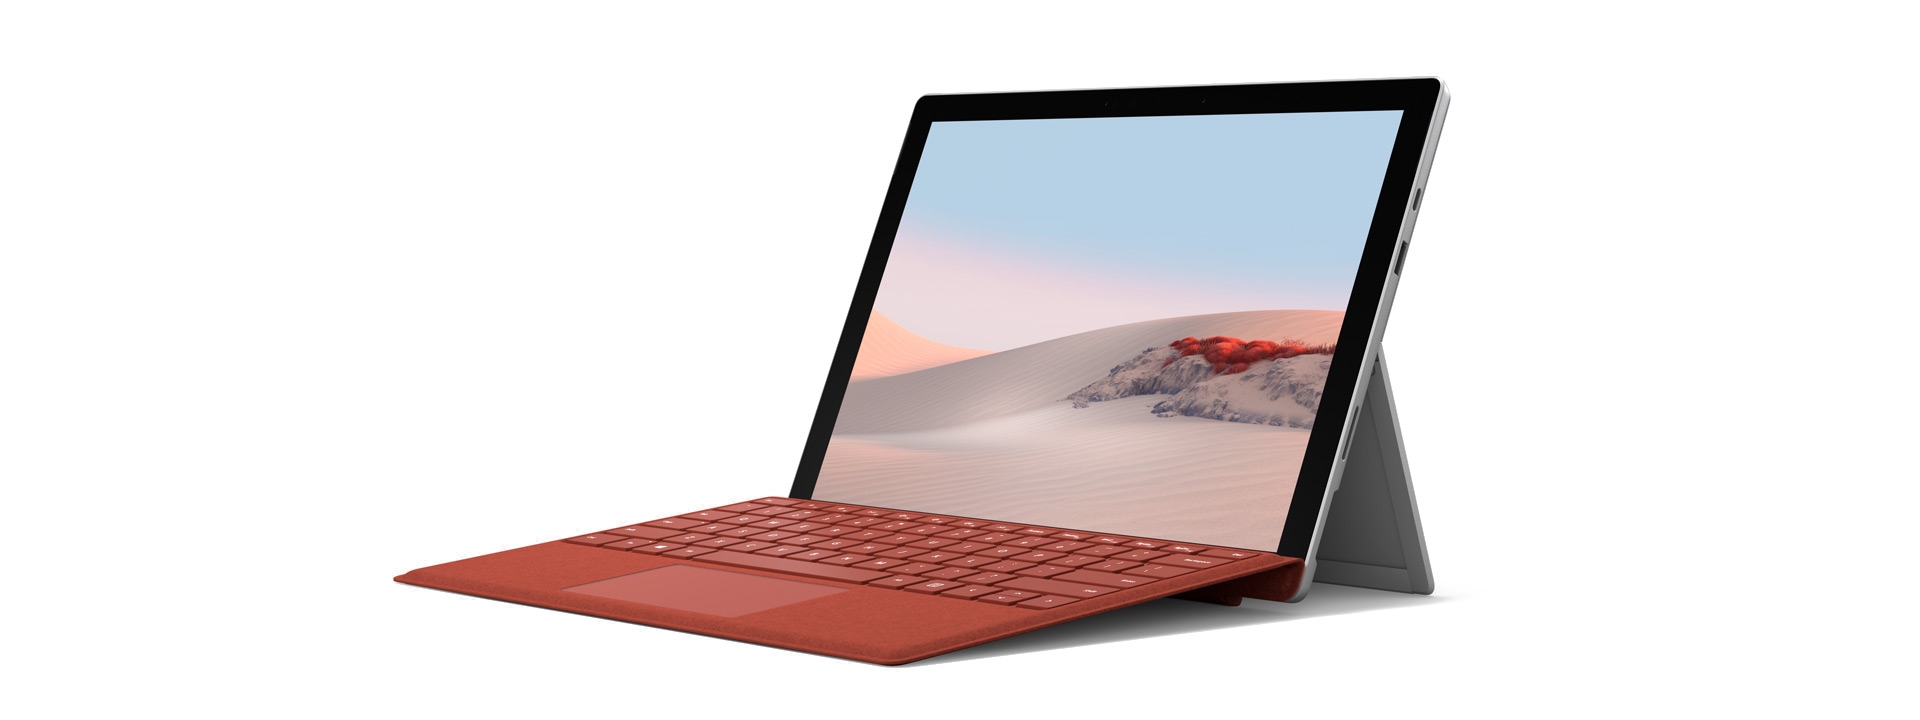 جهاز Surface Pro 7 مزود بلوحة مفاتيح Surface Type Cover بزاوية